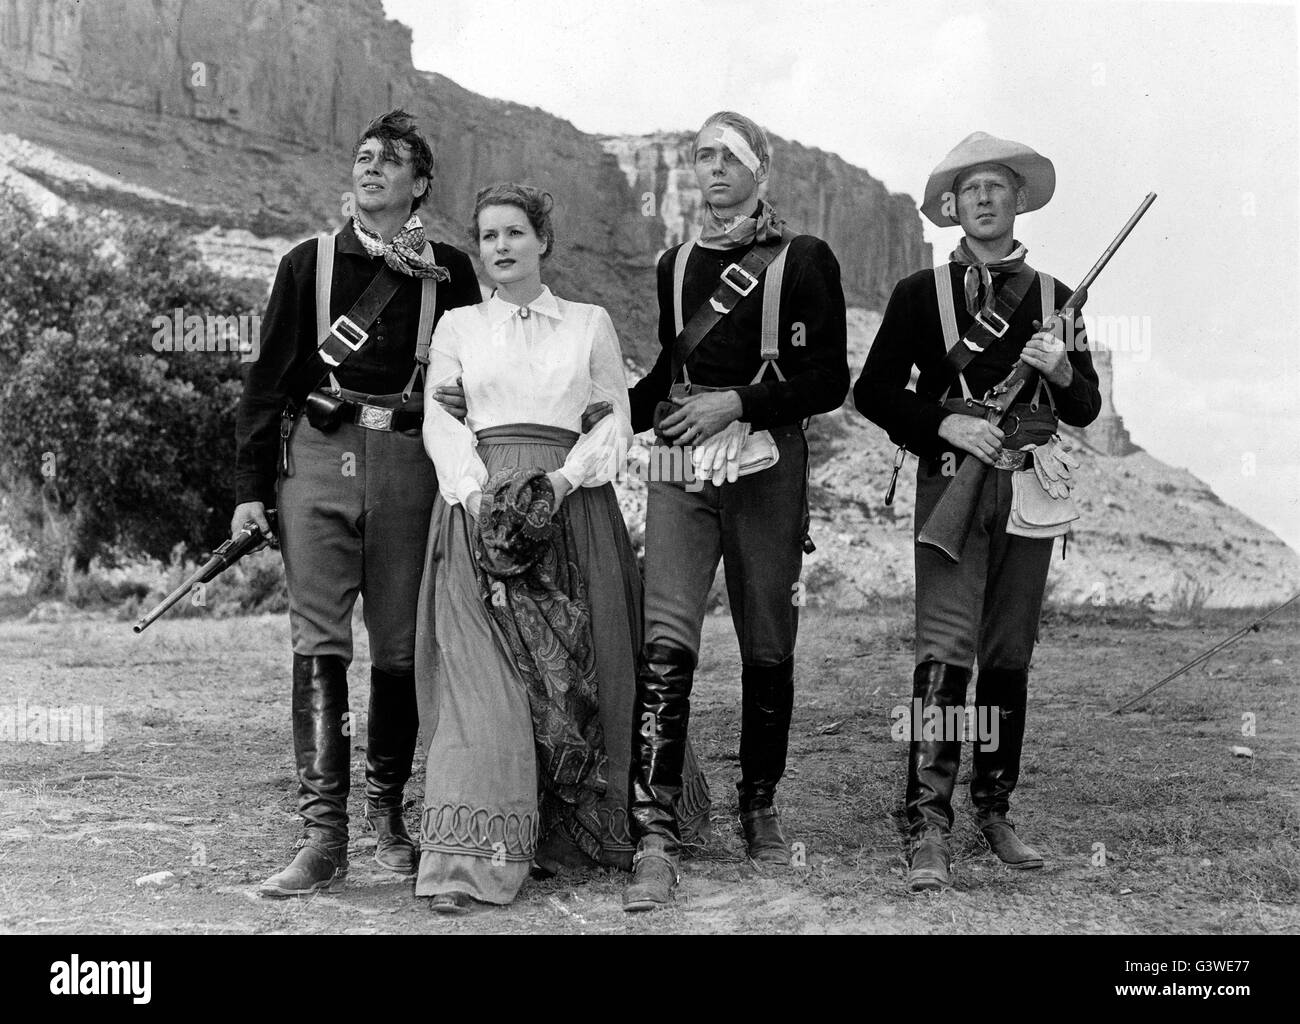 Rio Grande, USA 1950, Regie: John Ford, Darsteller: (v. l.) Ben Johnson, Maureen O'Hara, Claude Jarman jr., Harry Carey jr. Stock Photo